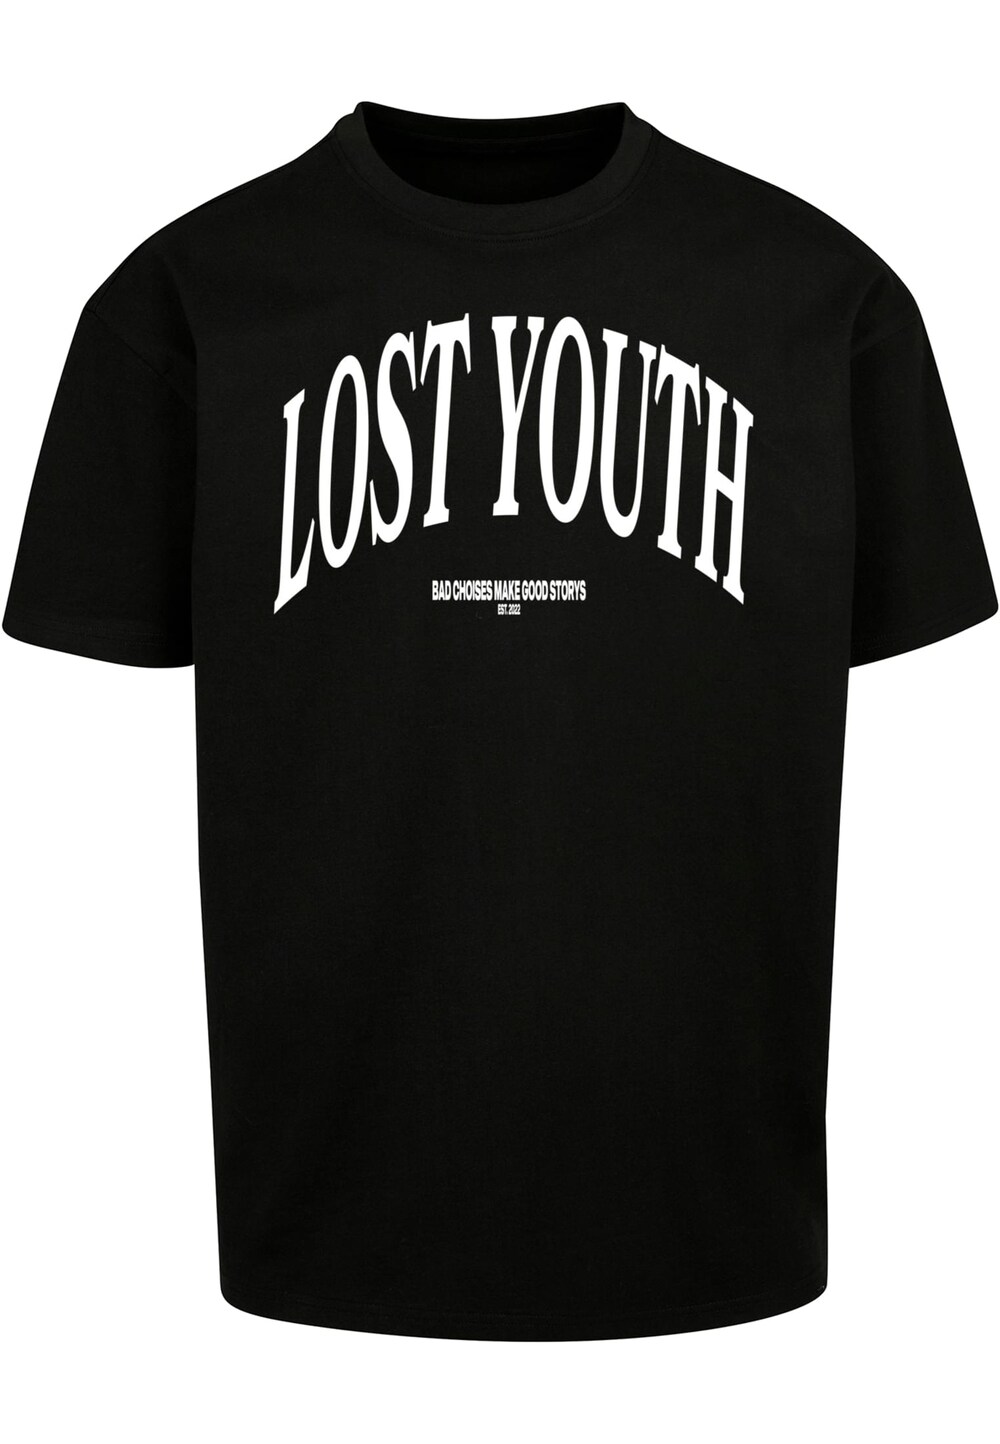 Футболка Lost Youth Classic V.1, черный